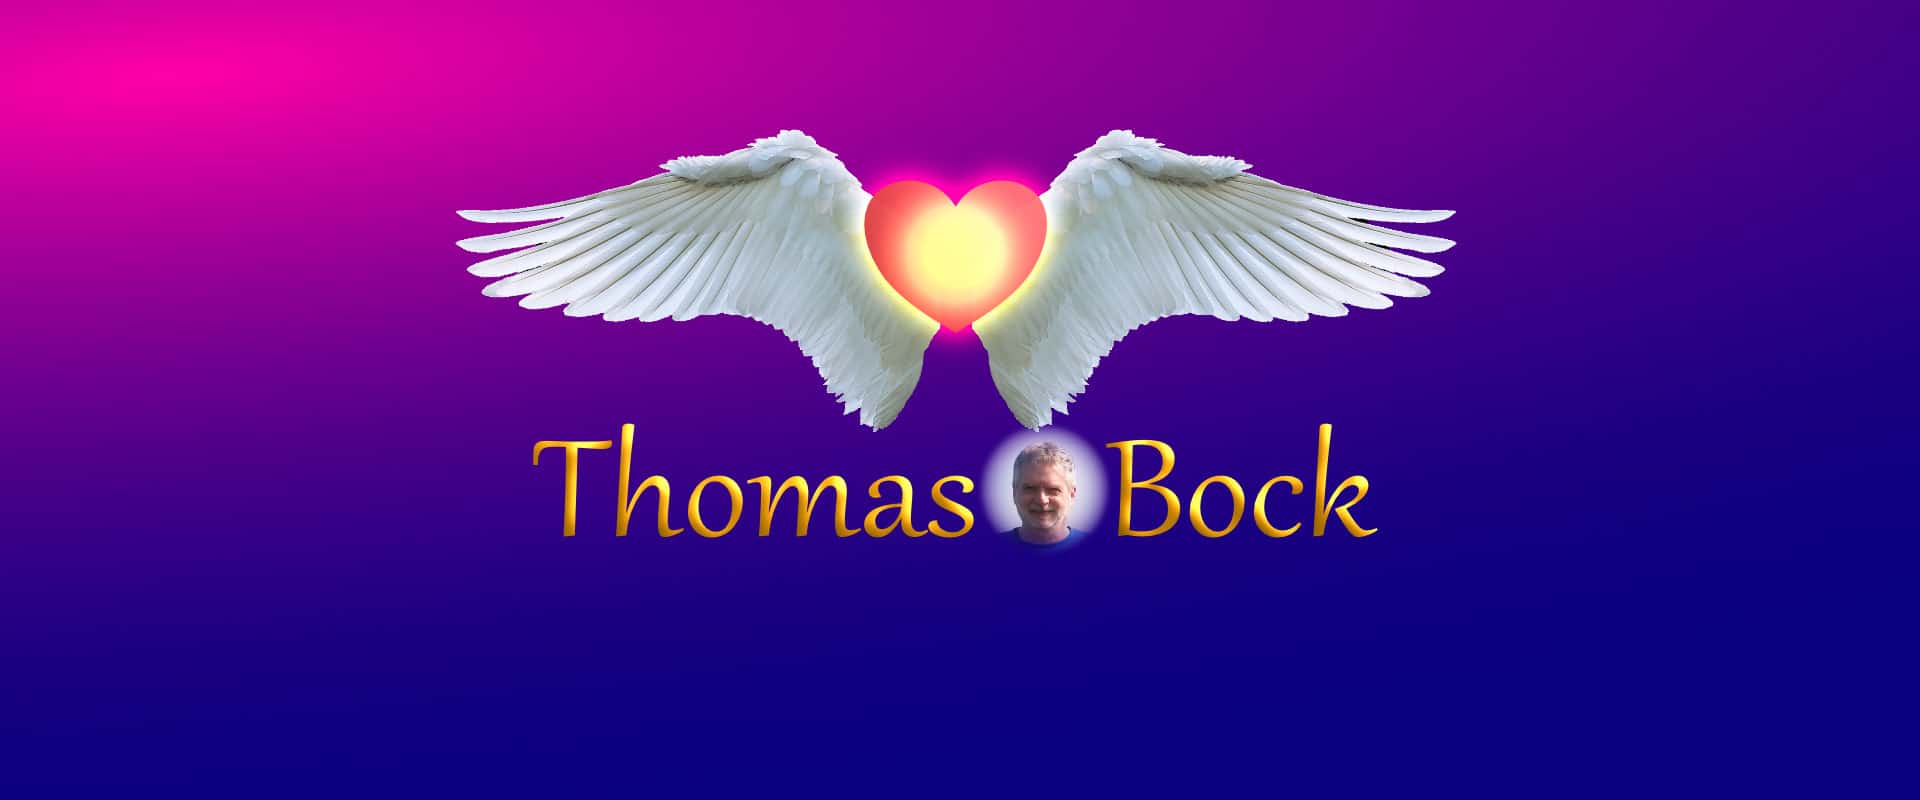 Thomas Bock